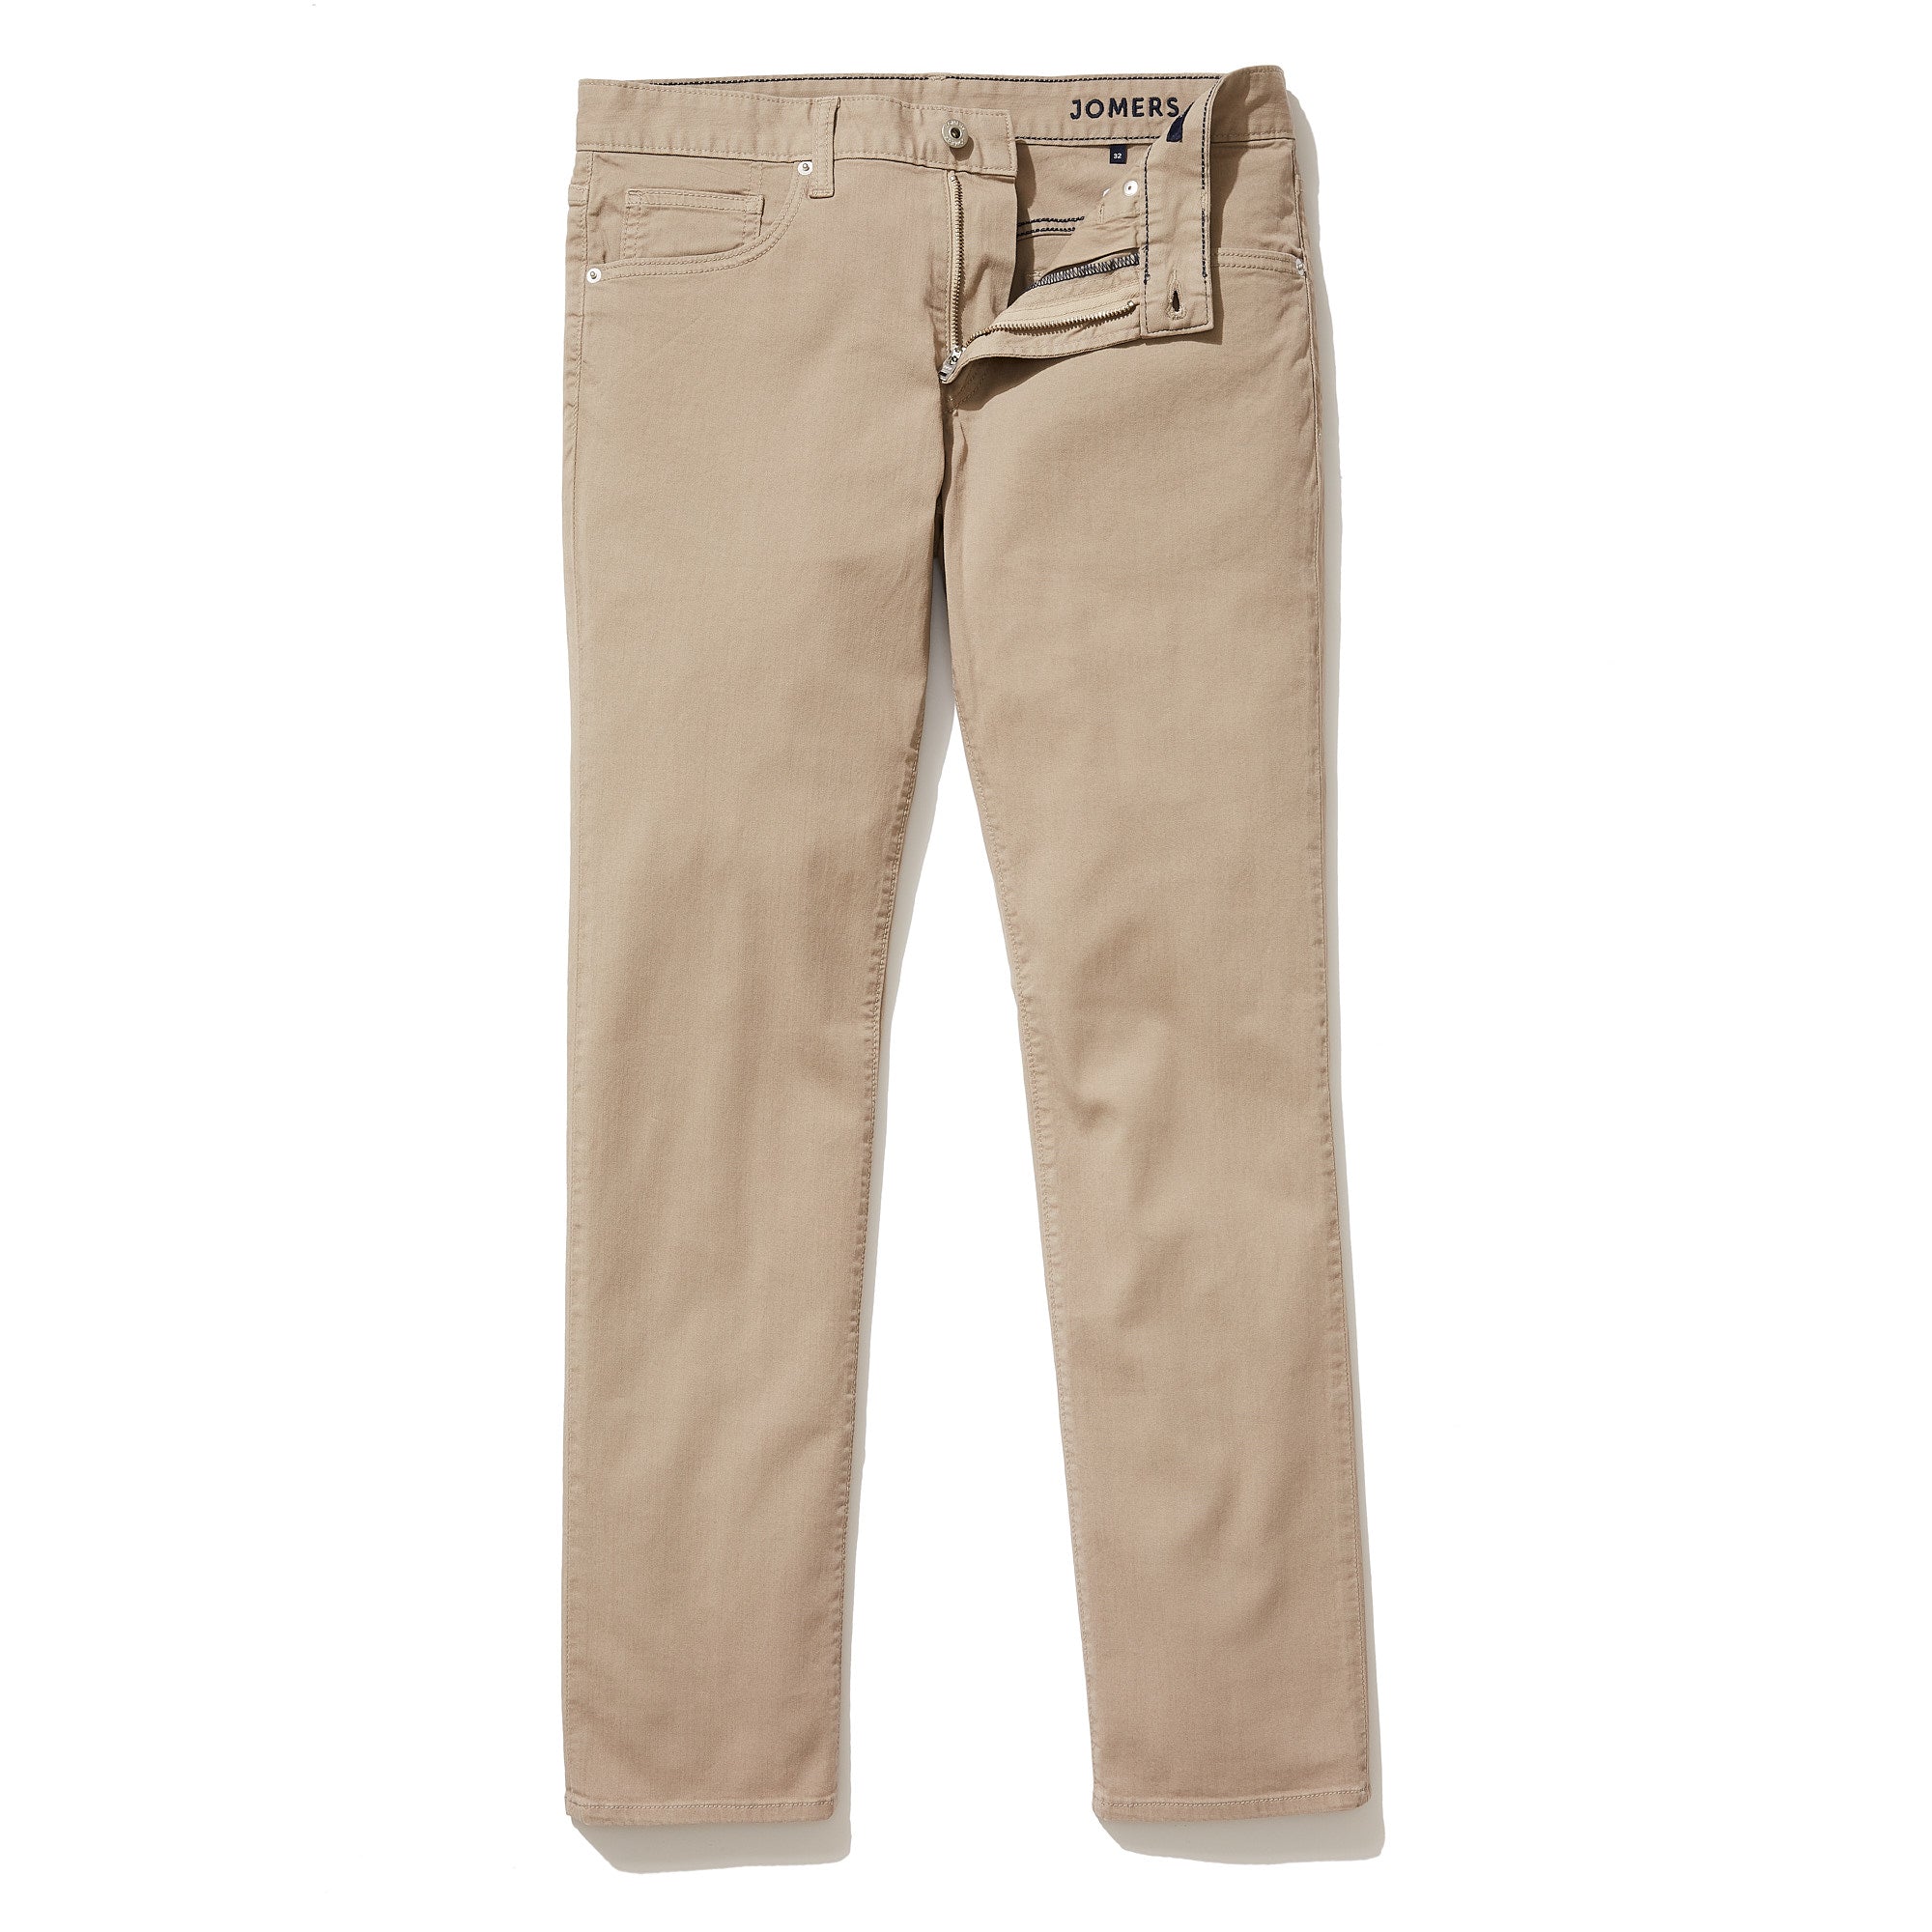 Calabria (Slim) - Khaki Italian Travel Jeans - Jomers